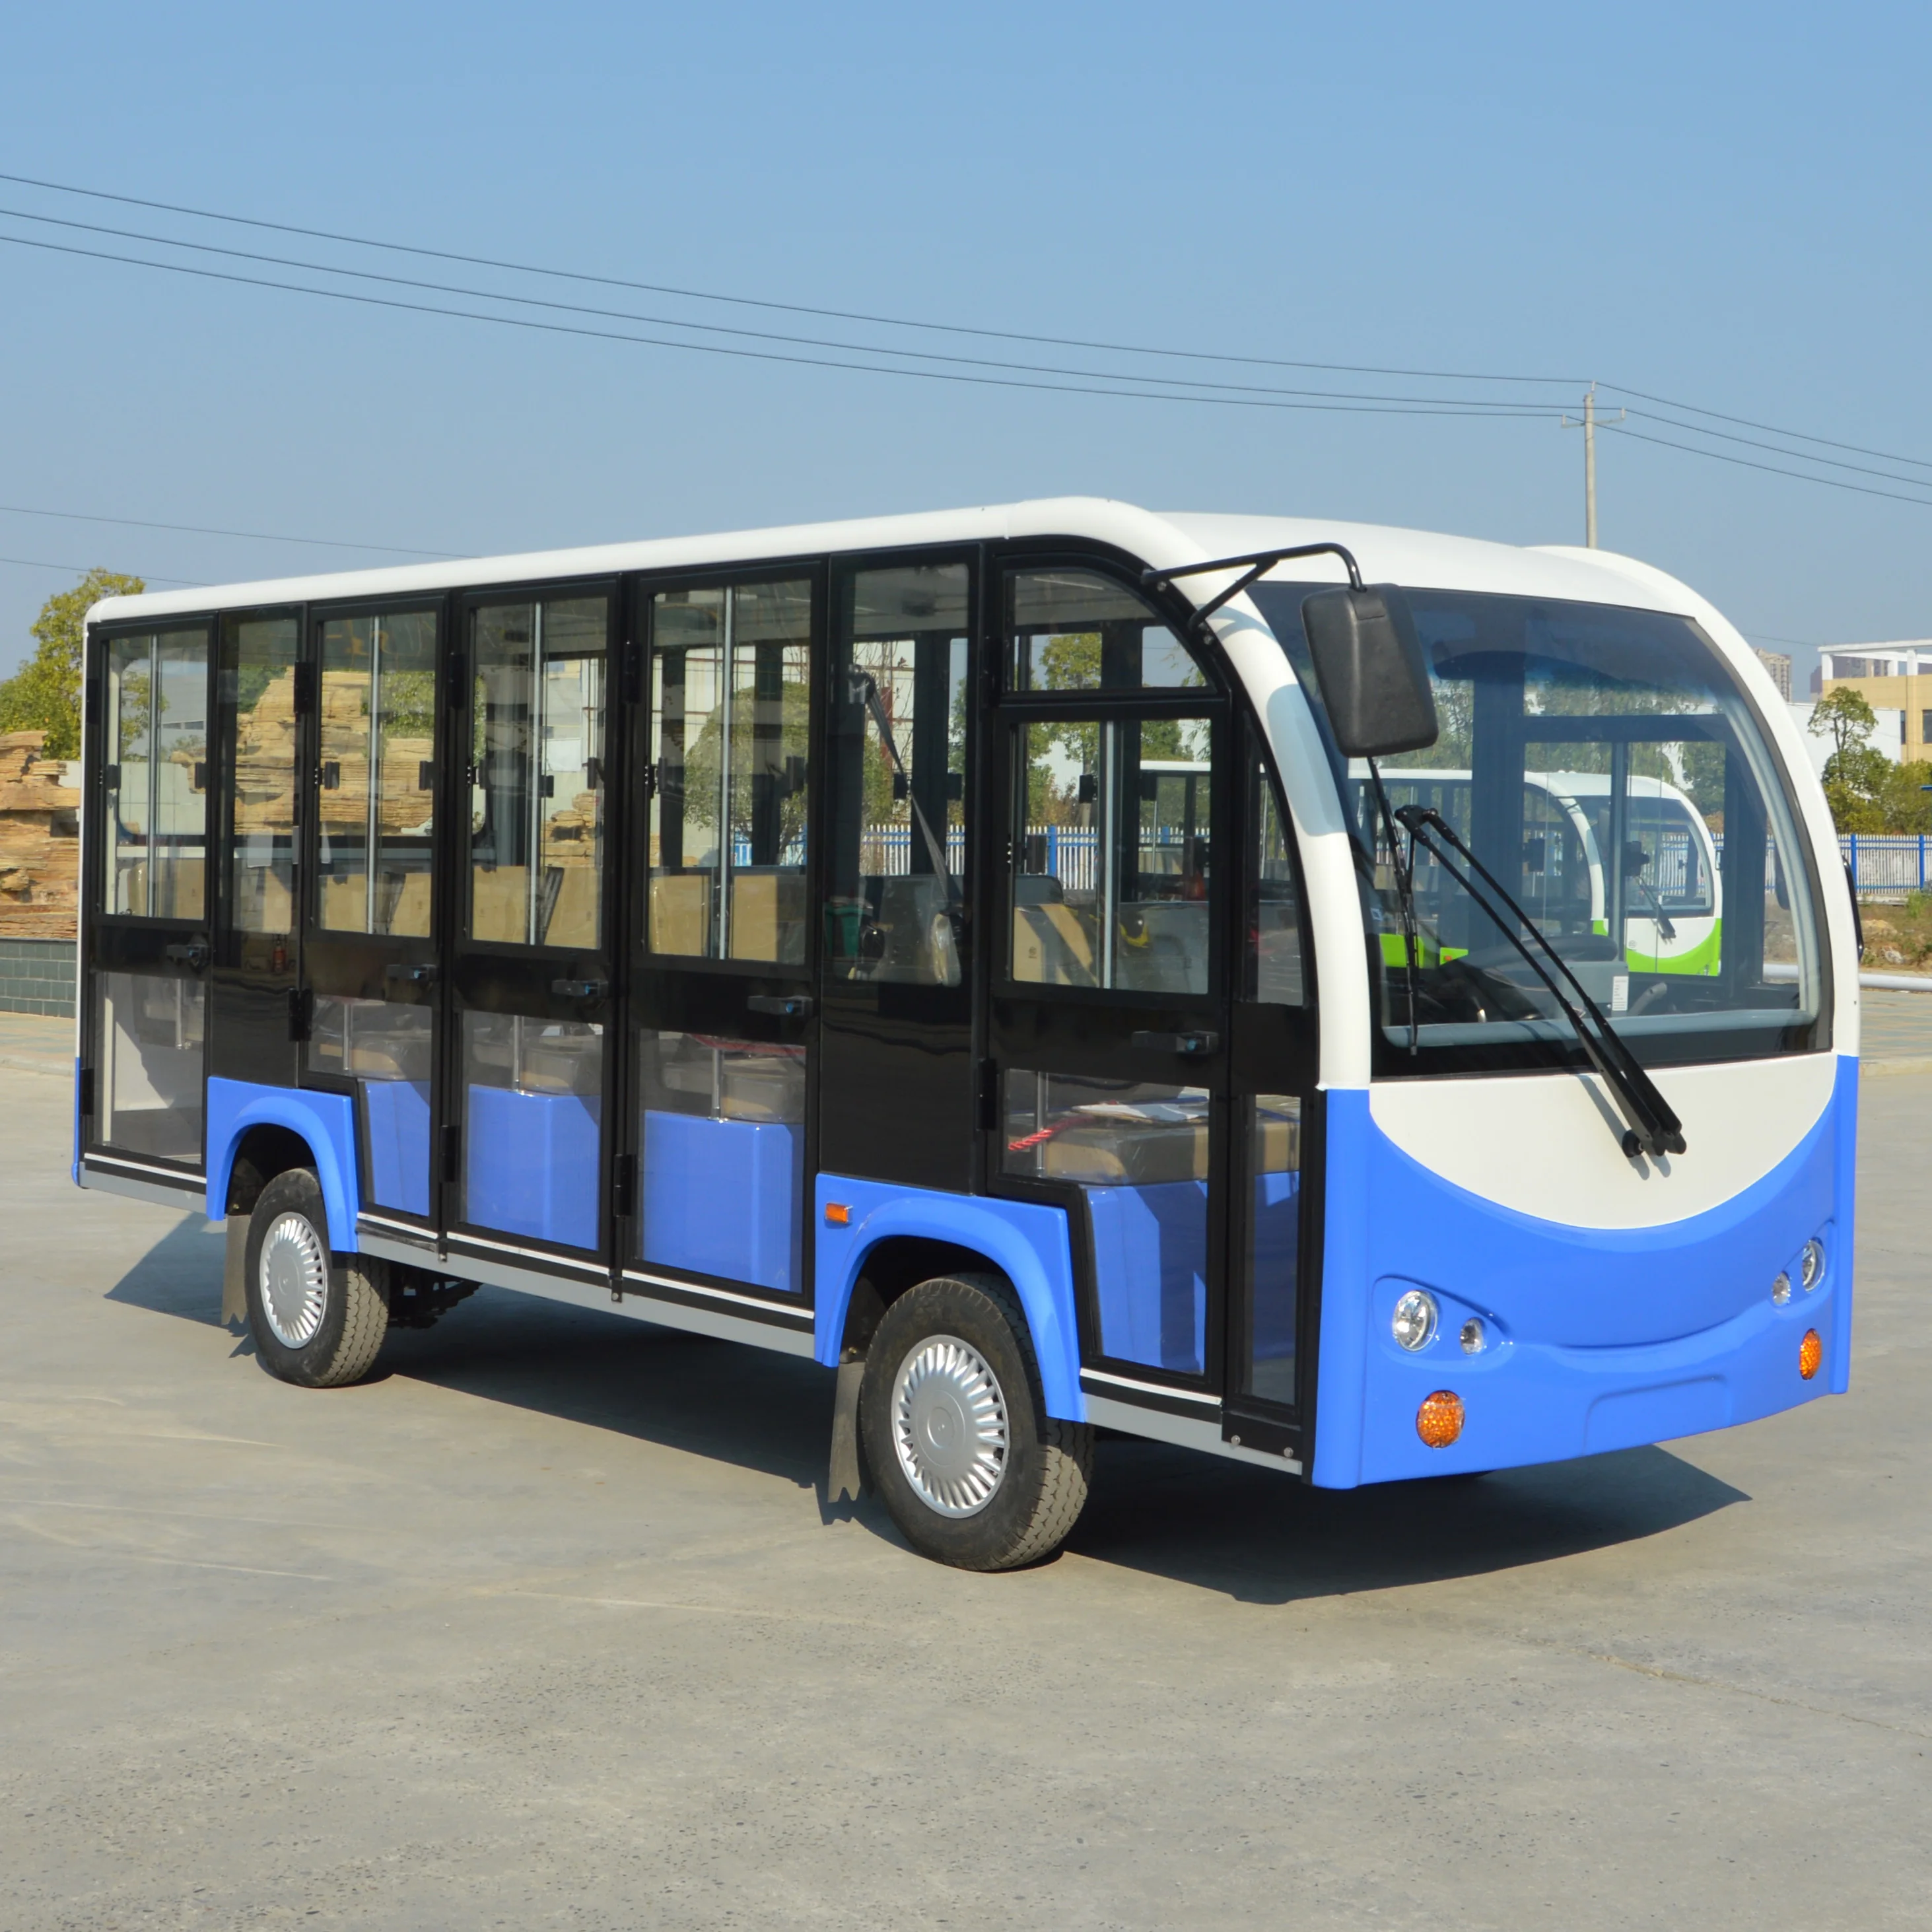 
New Model Enclosed 14 Passenger Electric Tourist Car 